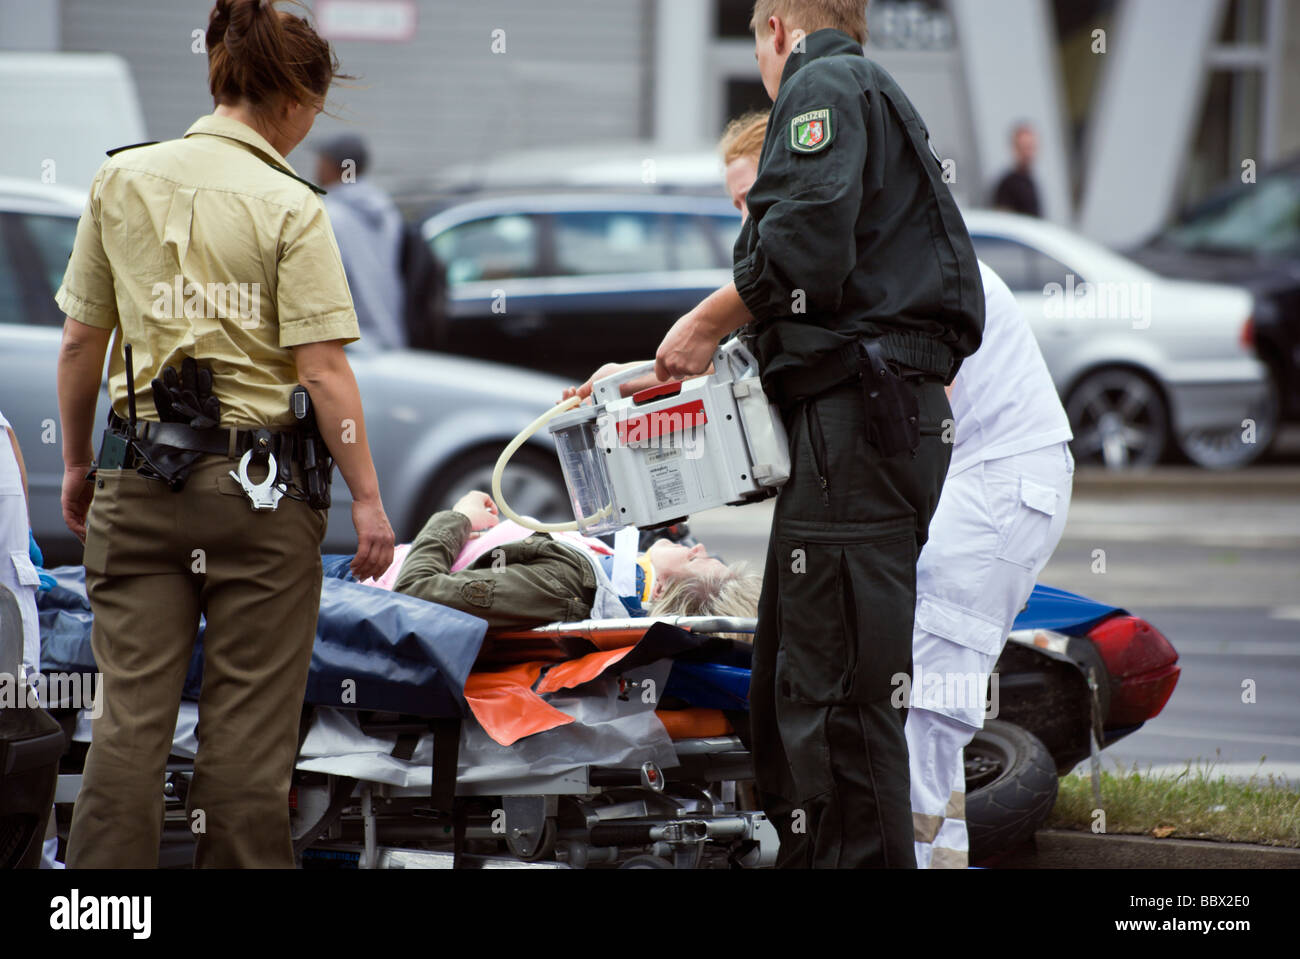 policemen helping medics at motorbike accident, injured girl on stretcher Stock Photo